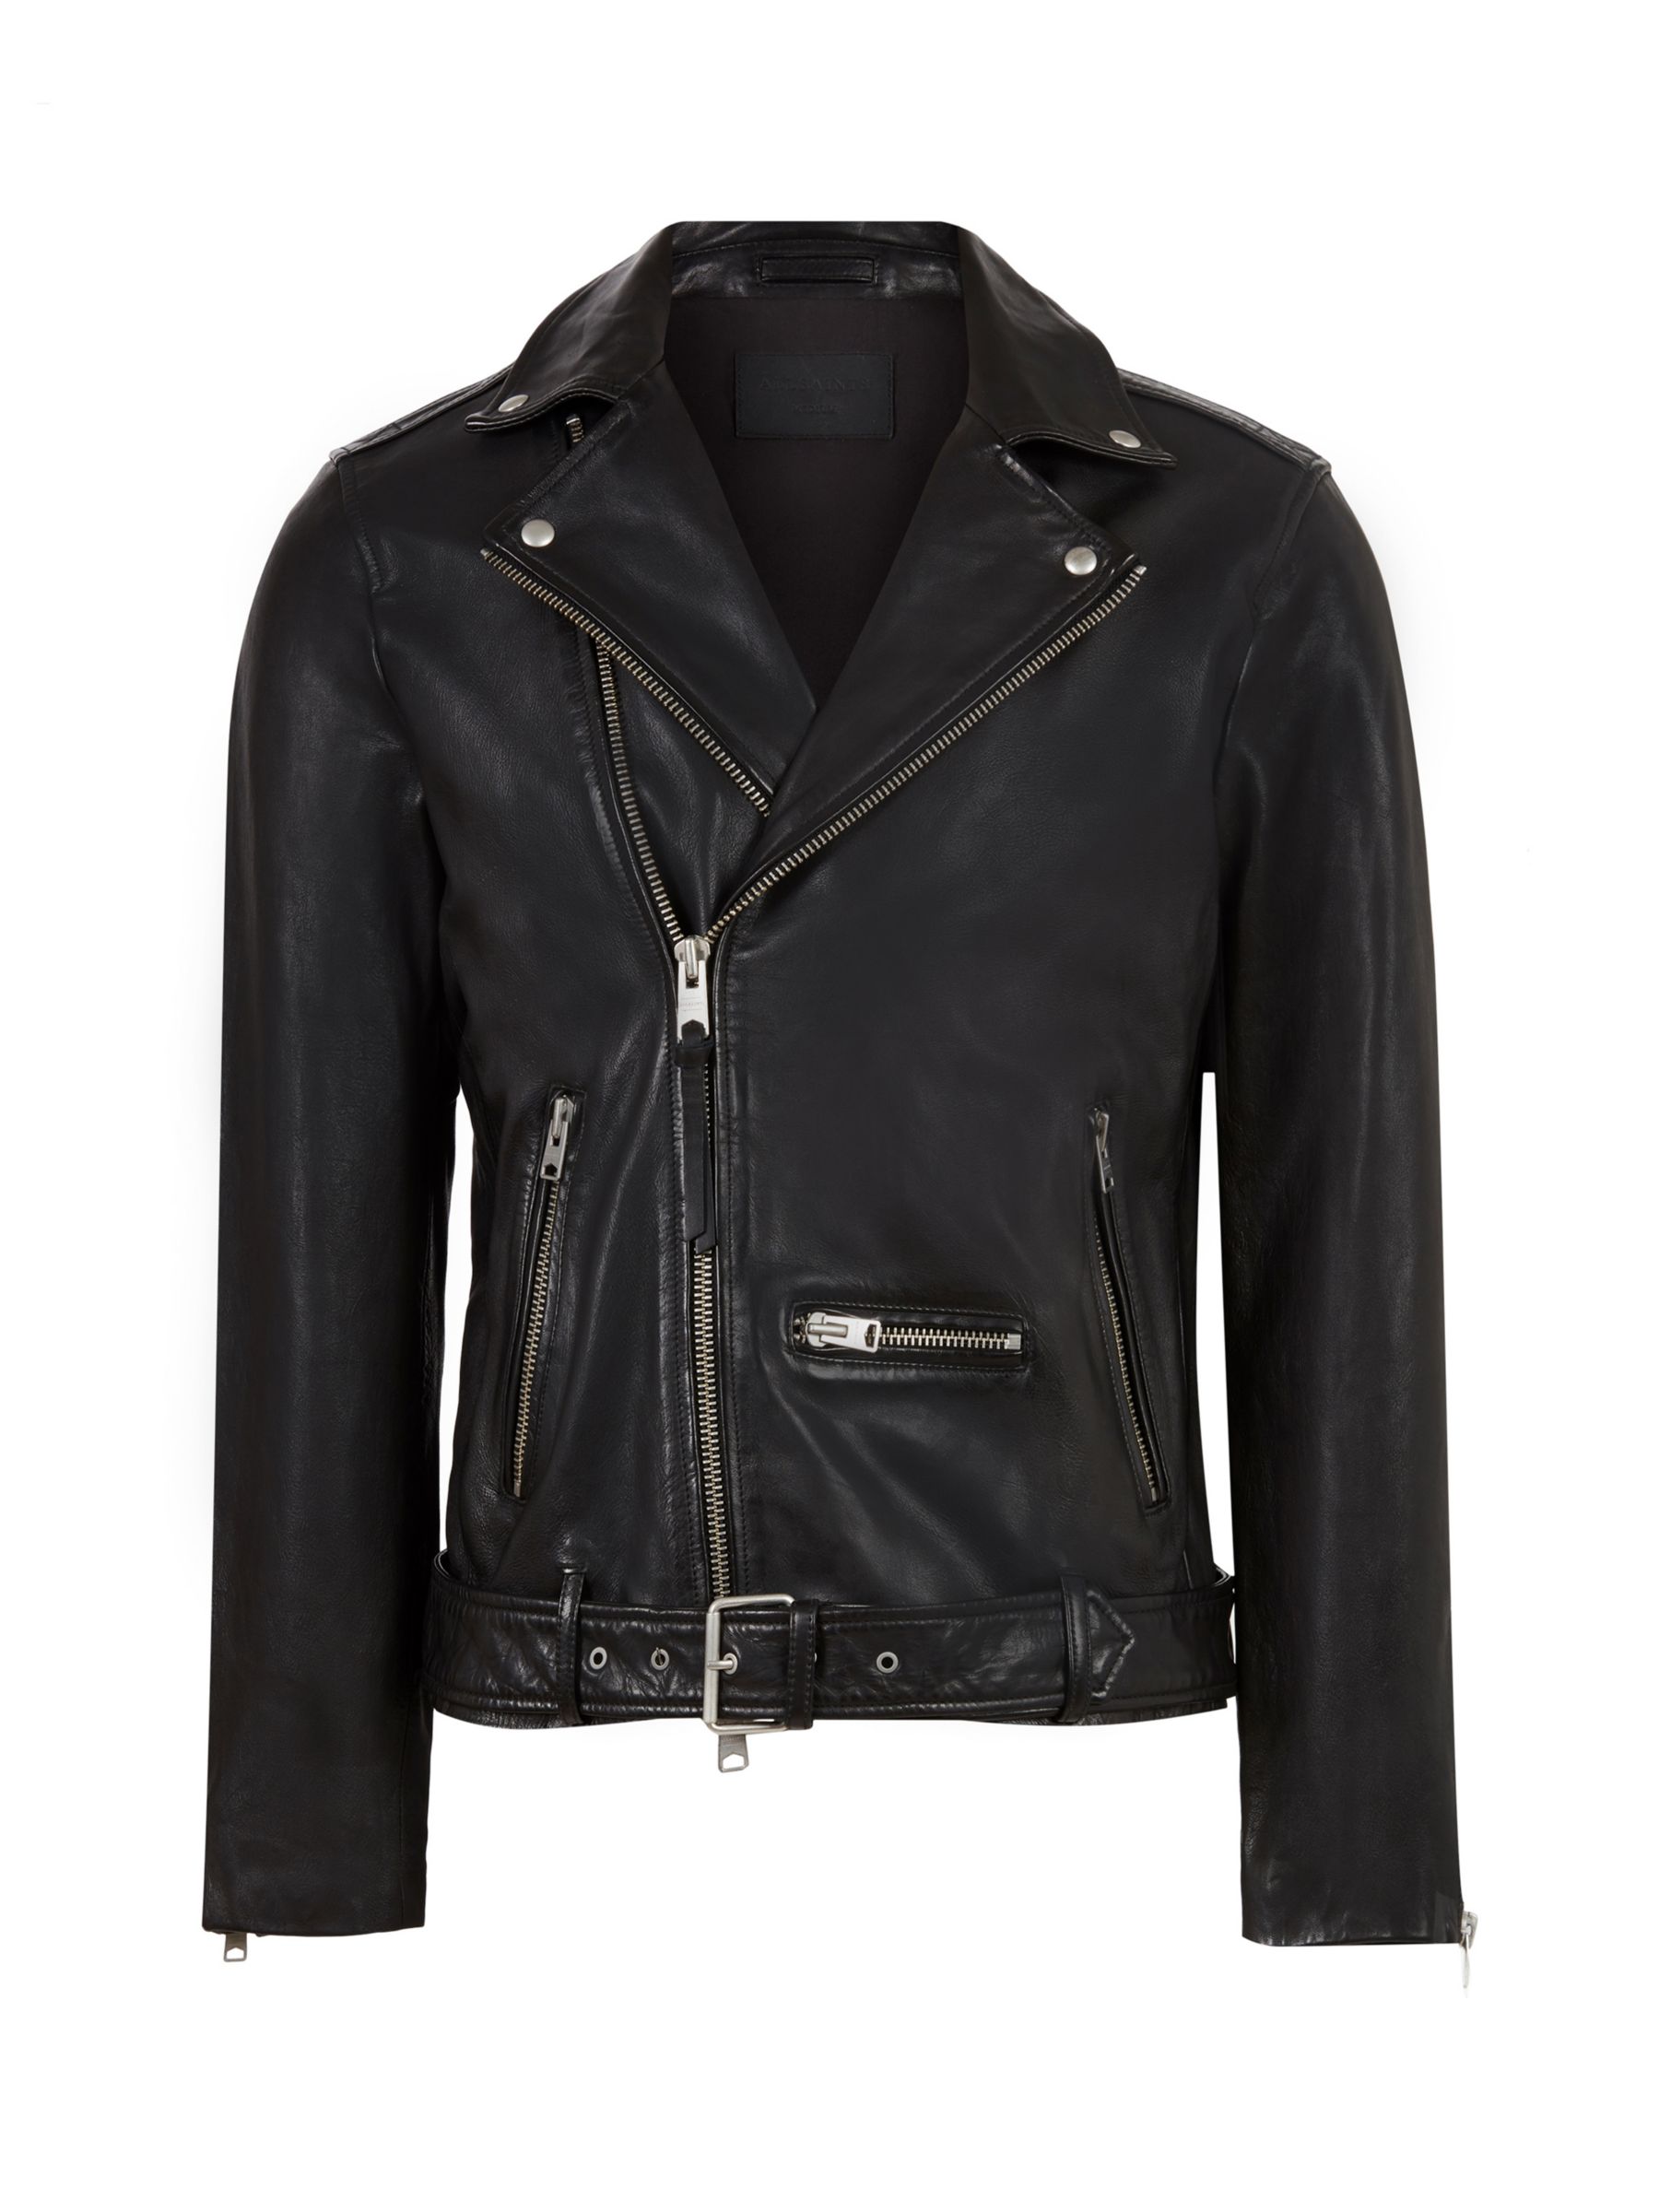 AllSaints Wick Leather Biker Jacket, Black at John Lewis & Partners